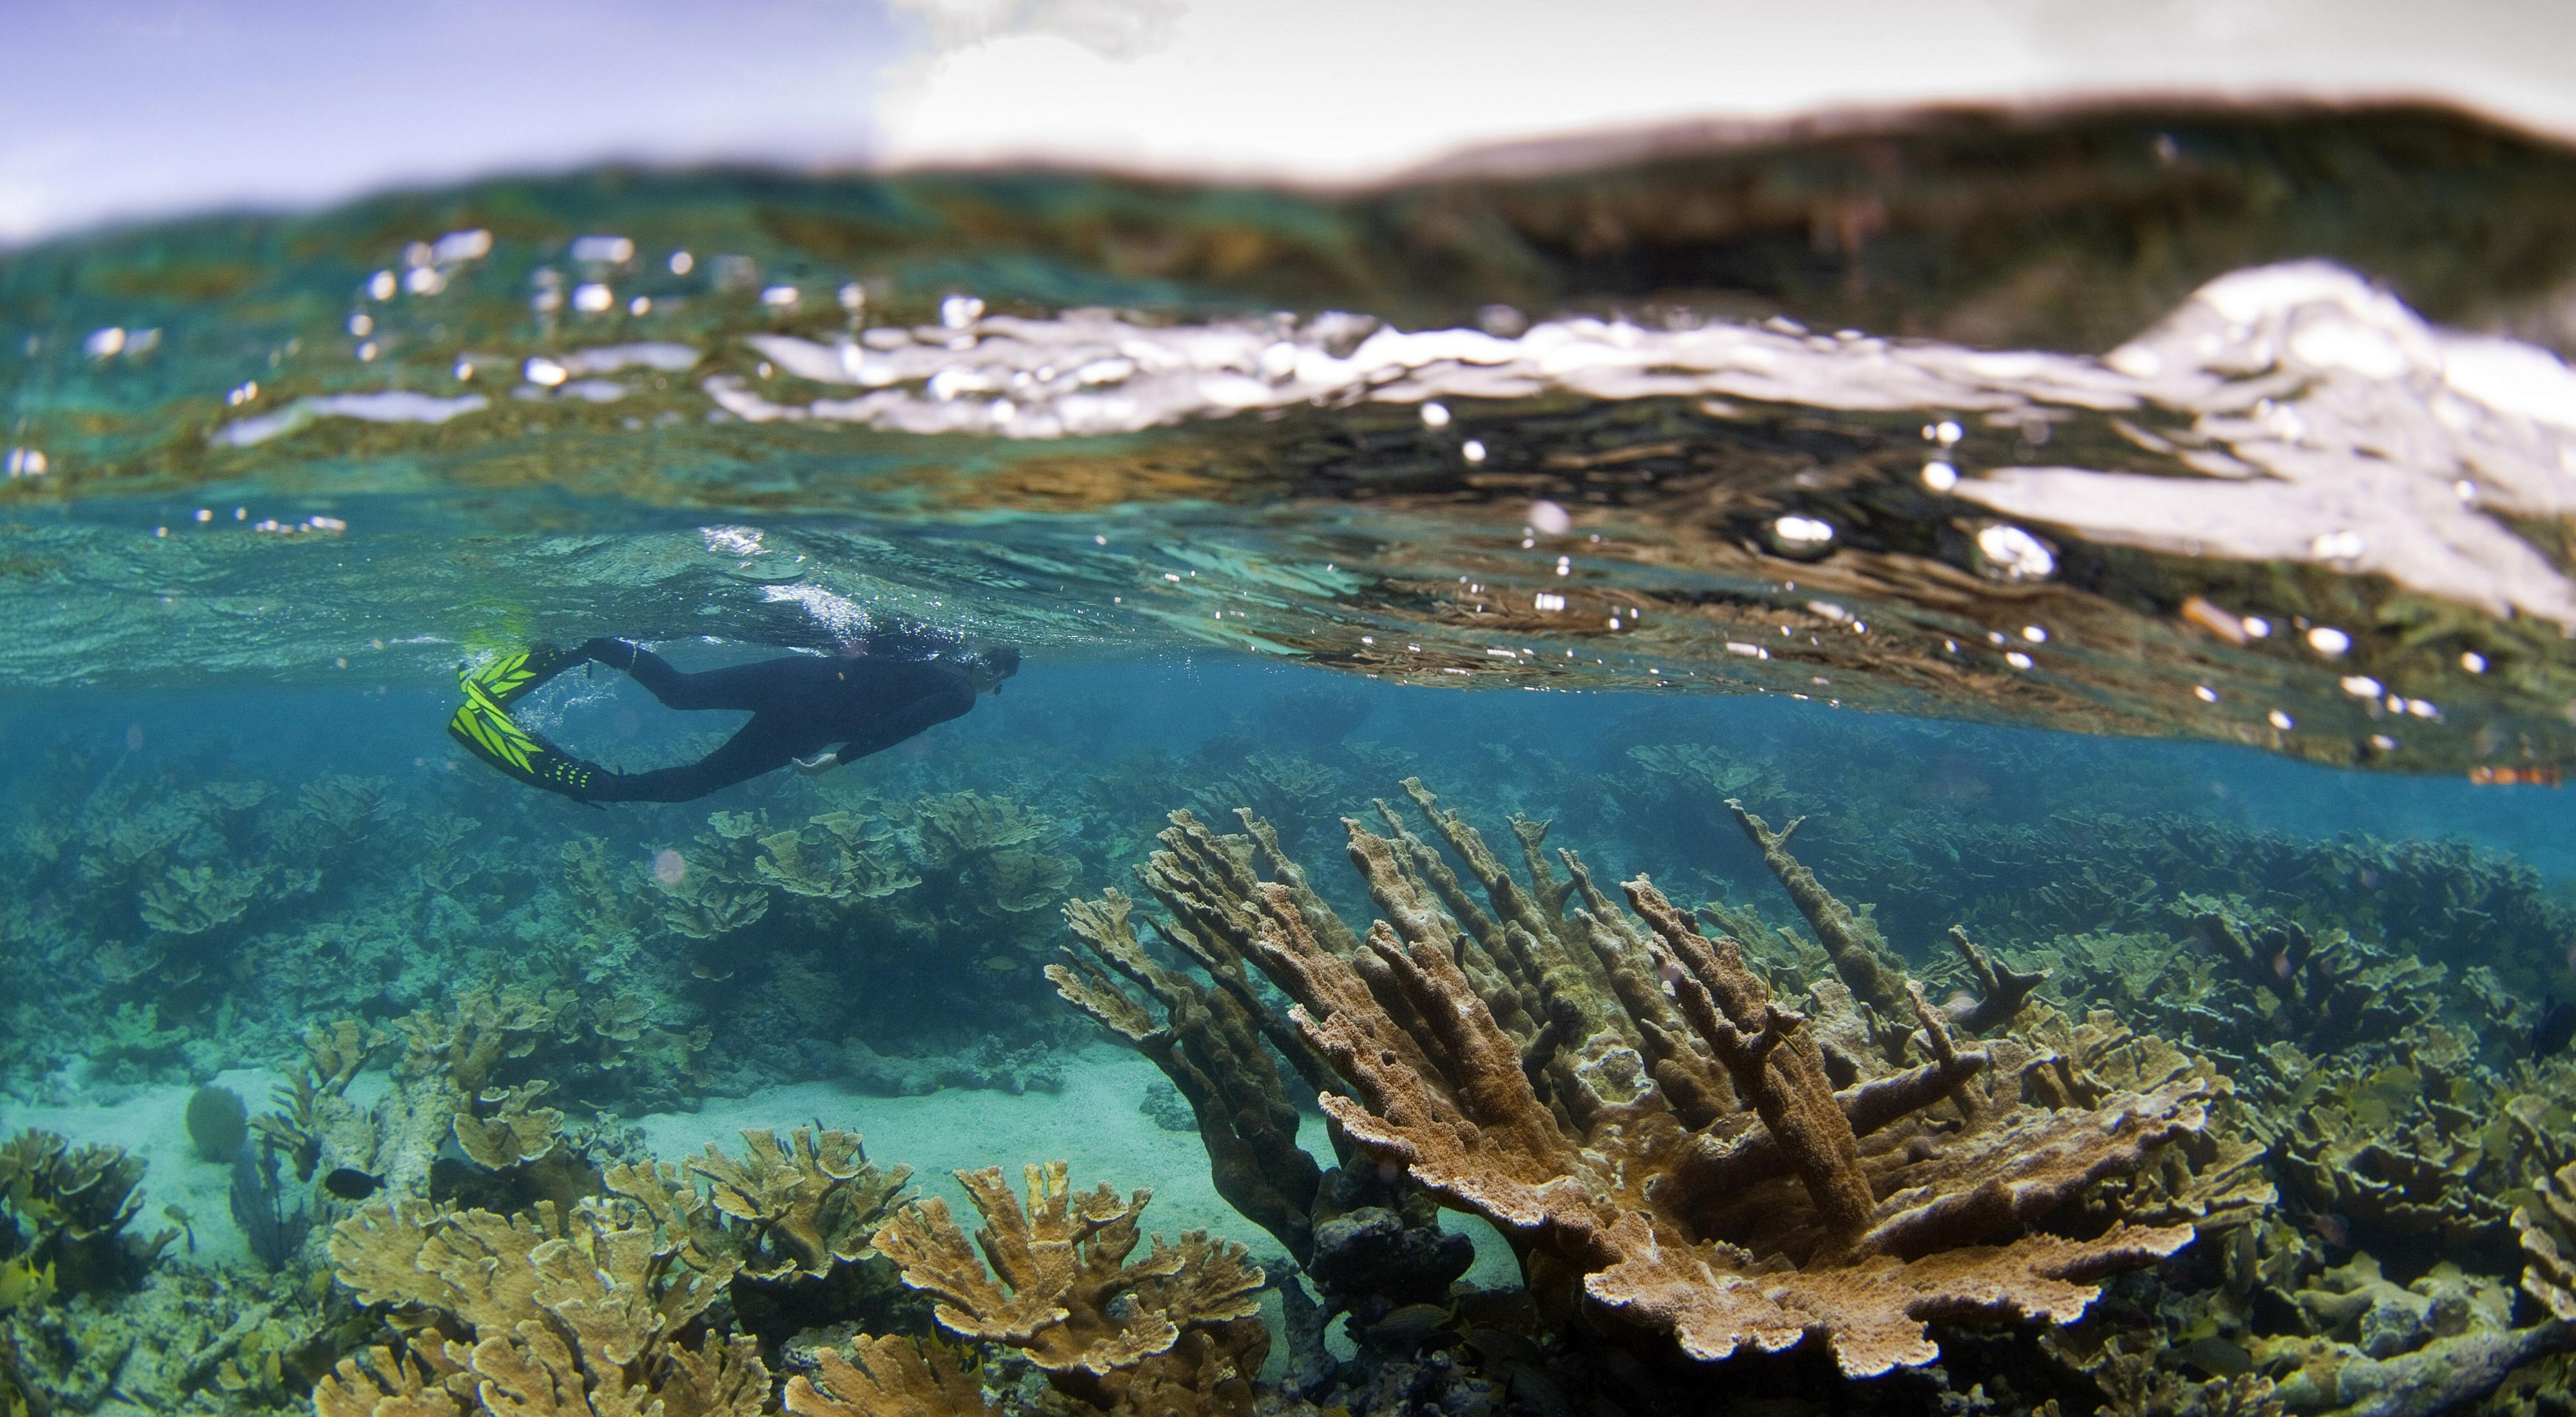 A diver swims through a thriving coral reef in Jardines de la Reina, Cuba.